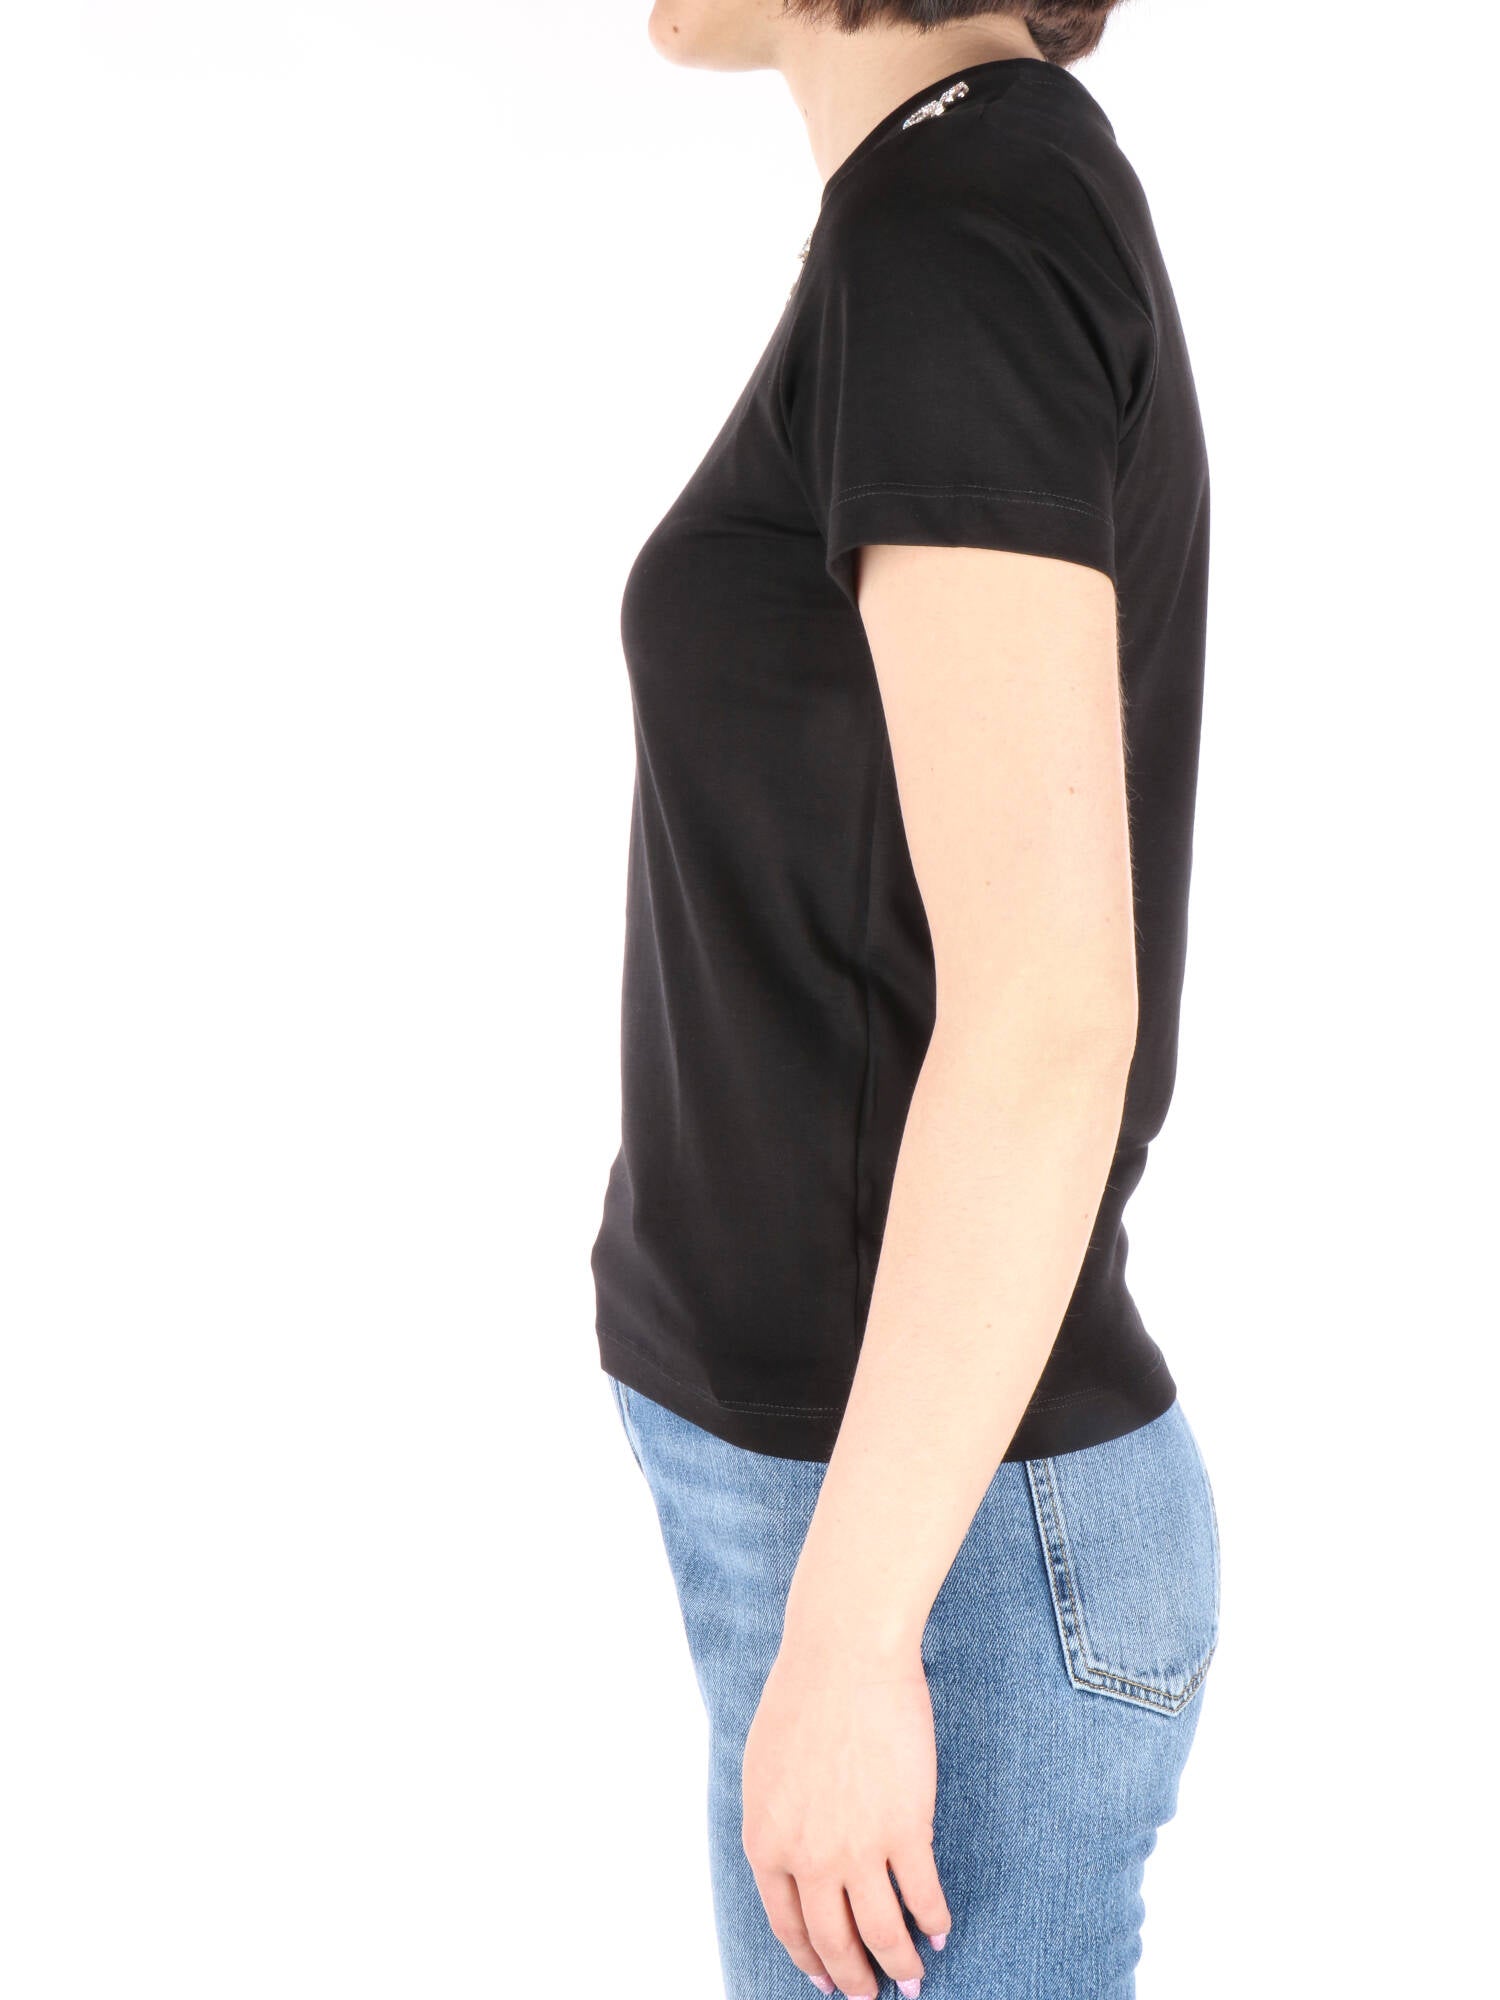 Gaelle Paris t-shirt con logo nera